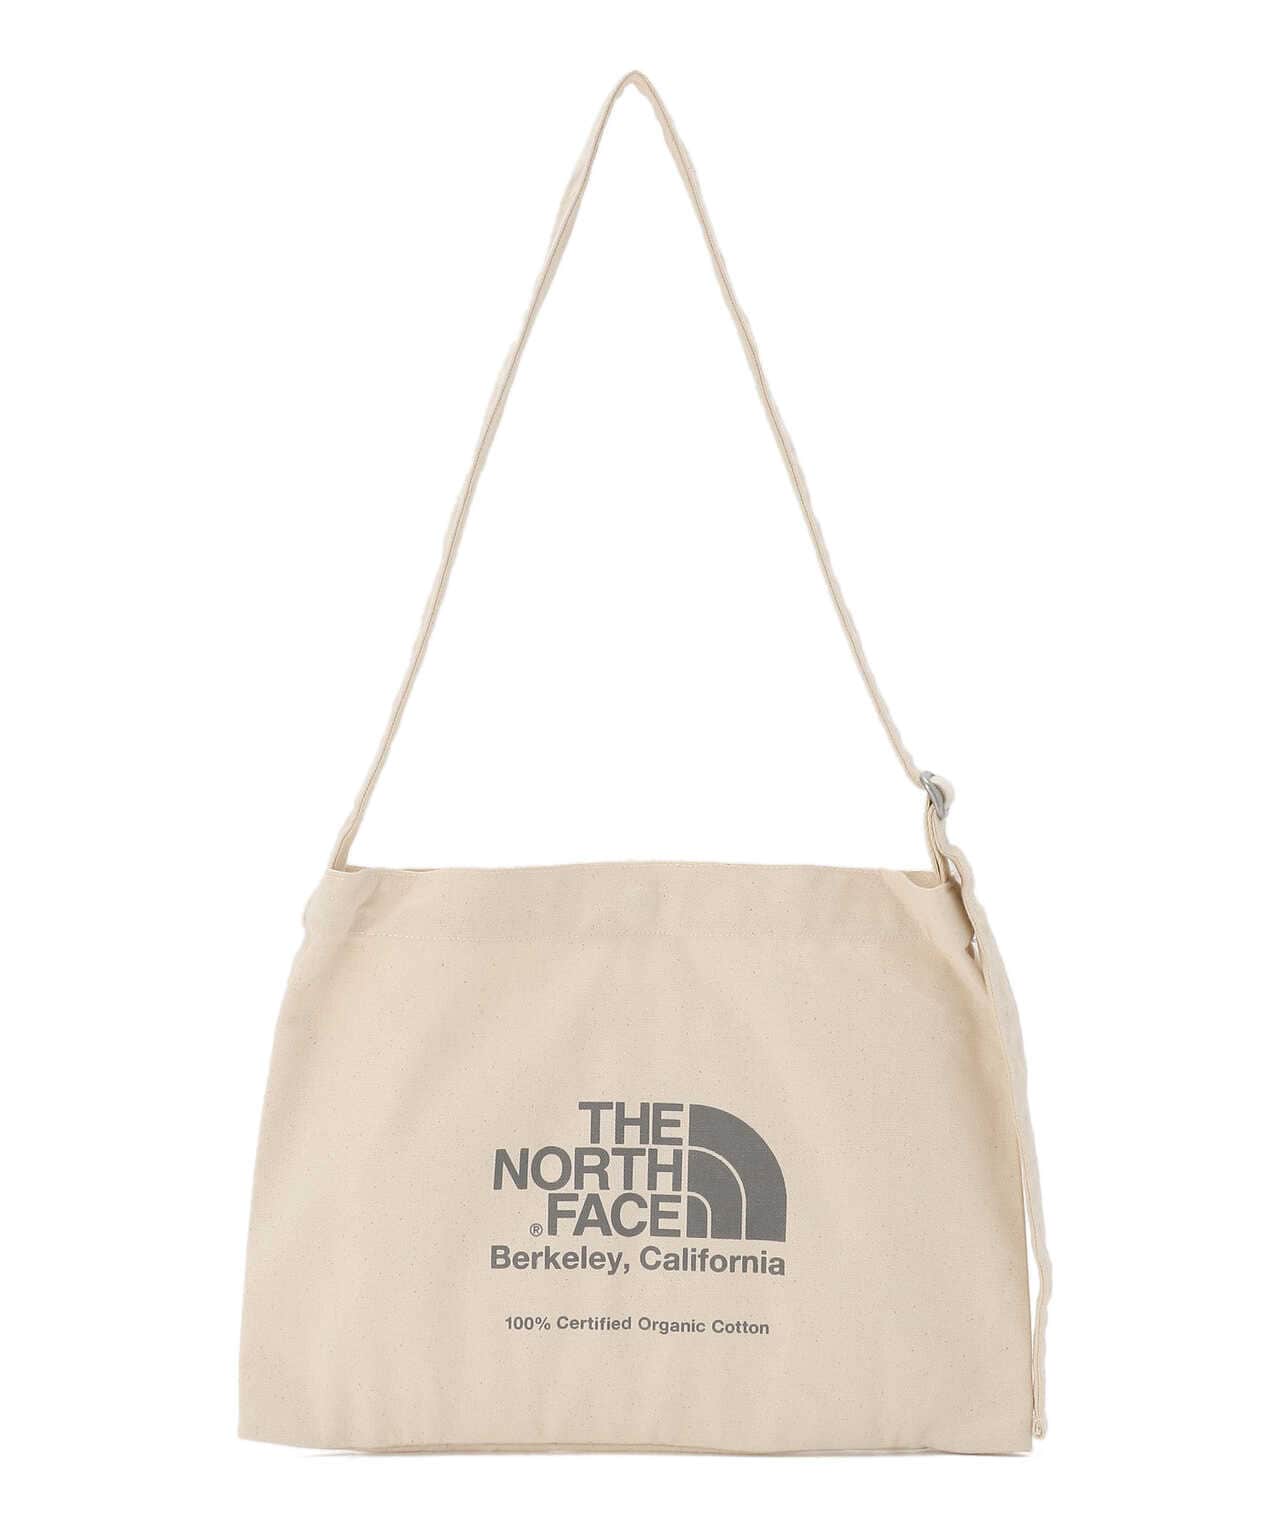 THE NORTH FACE/ザ ノース フェイス/Musette Bag/ミュゼットバッグ